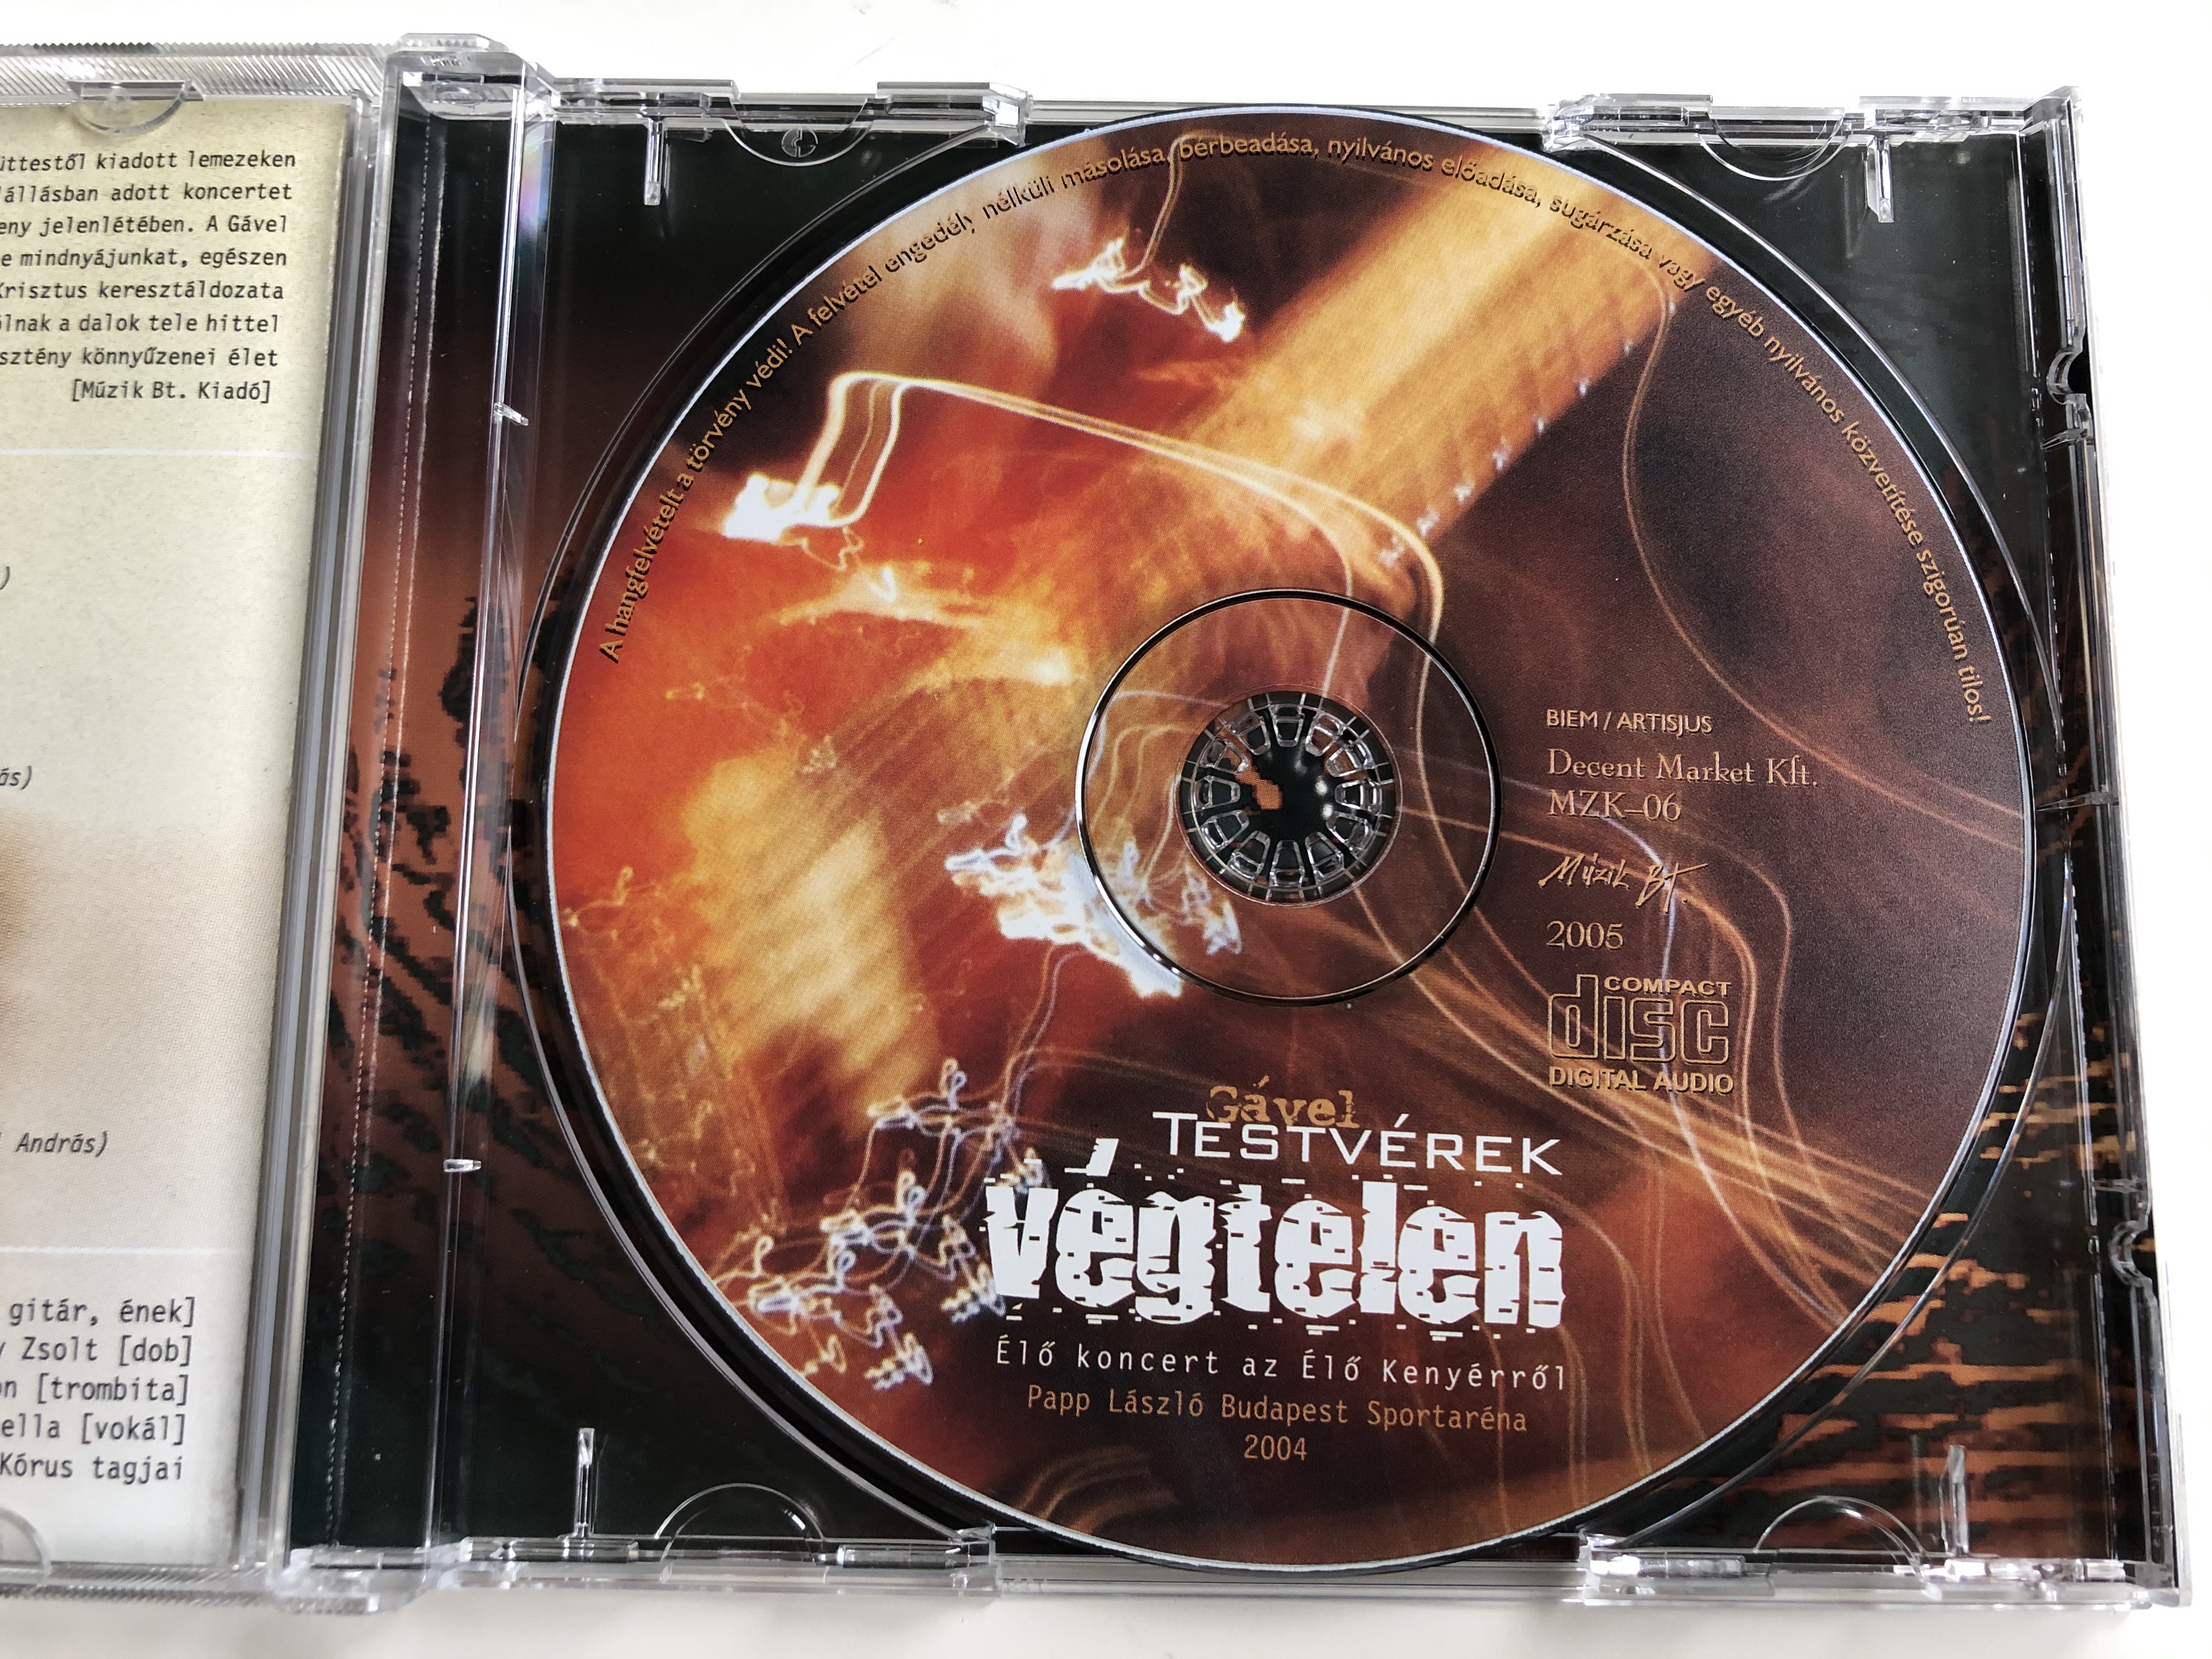 gavel-testverek-elo-koncert-az-elo-kenyerrol-vegetelen-papp-laszlo-budapest-sportarena-2004-muzik-bt.-audio-cd-2005-mzk-06-5-.jpg